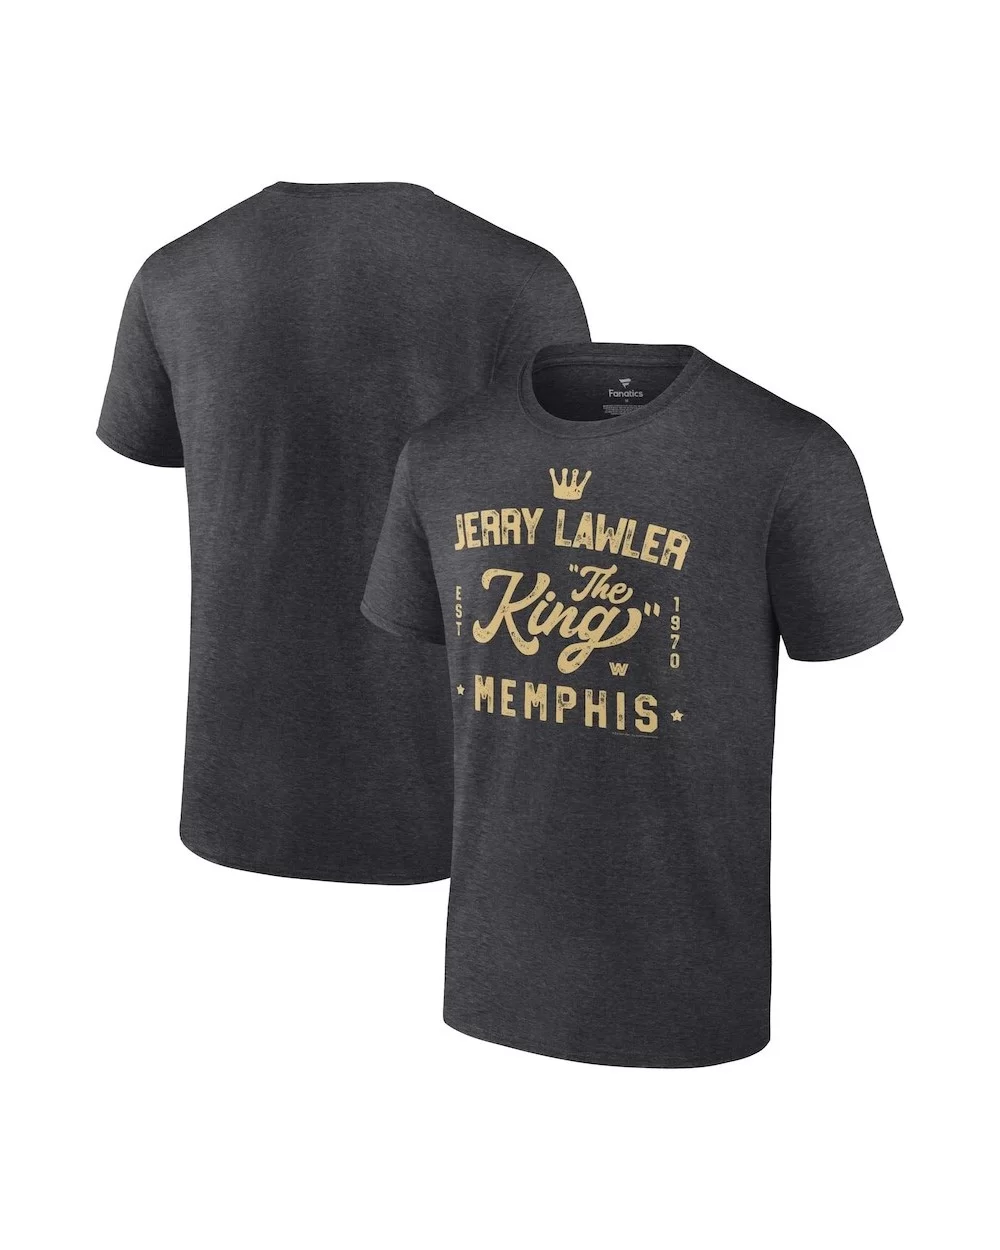 Men's Fanatics Branded Charcoal Jerry Lawler King of Memphis T-Shirt $9.60 T-Shirts